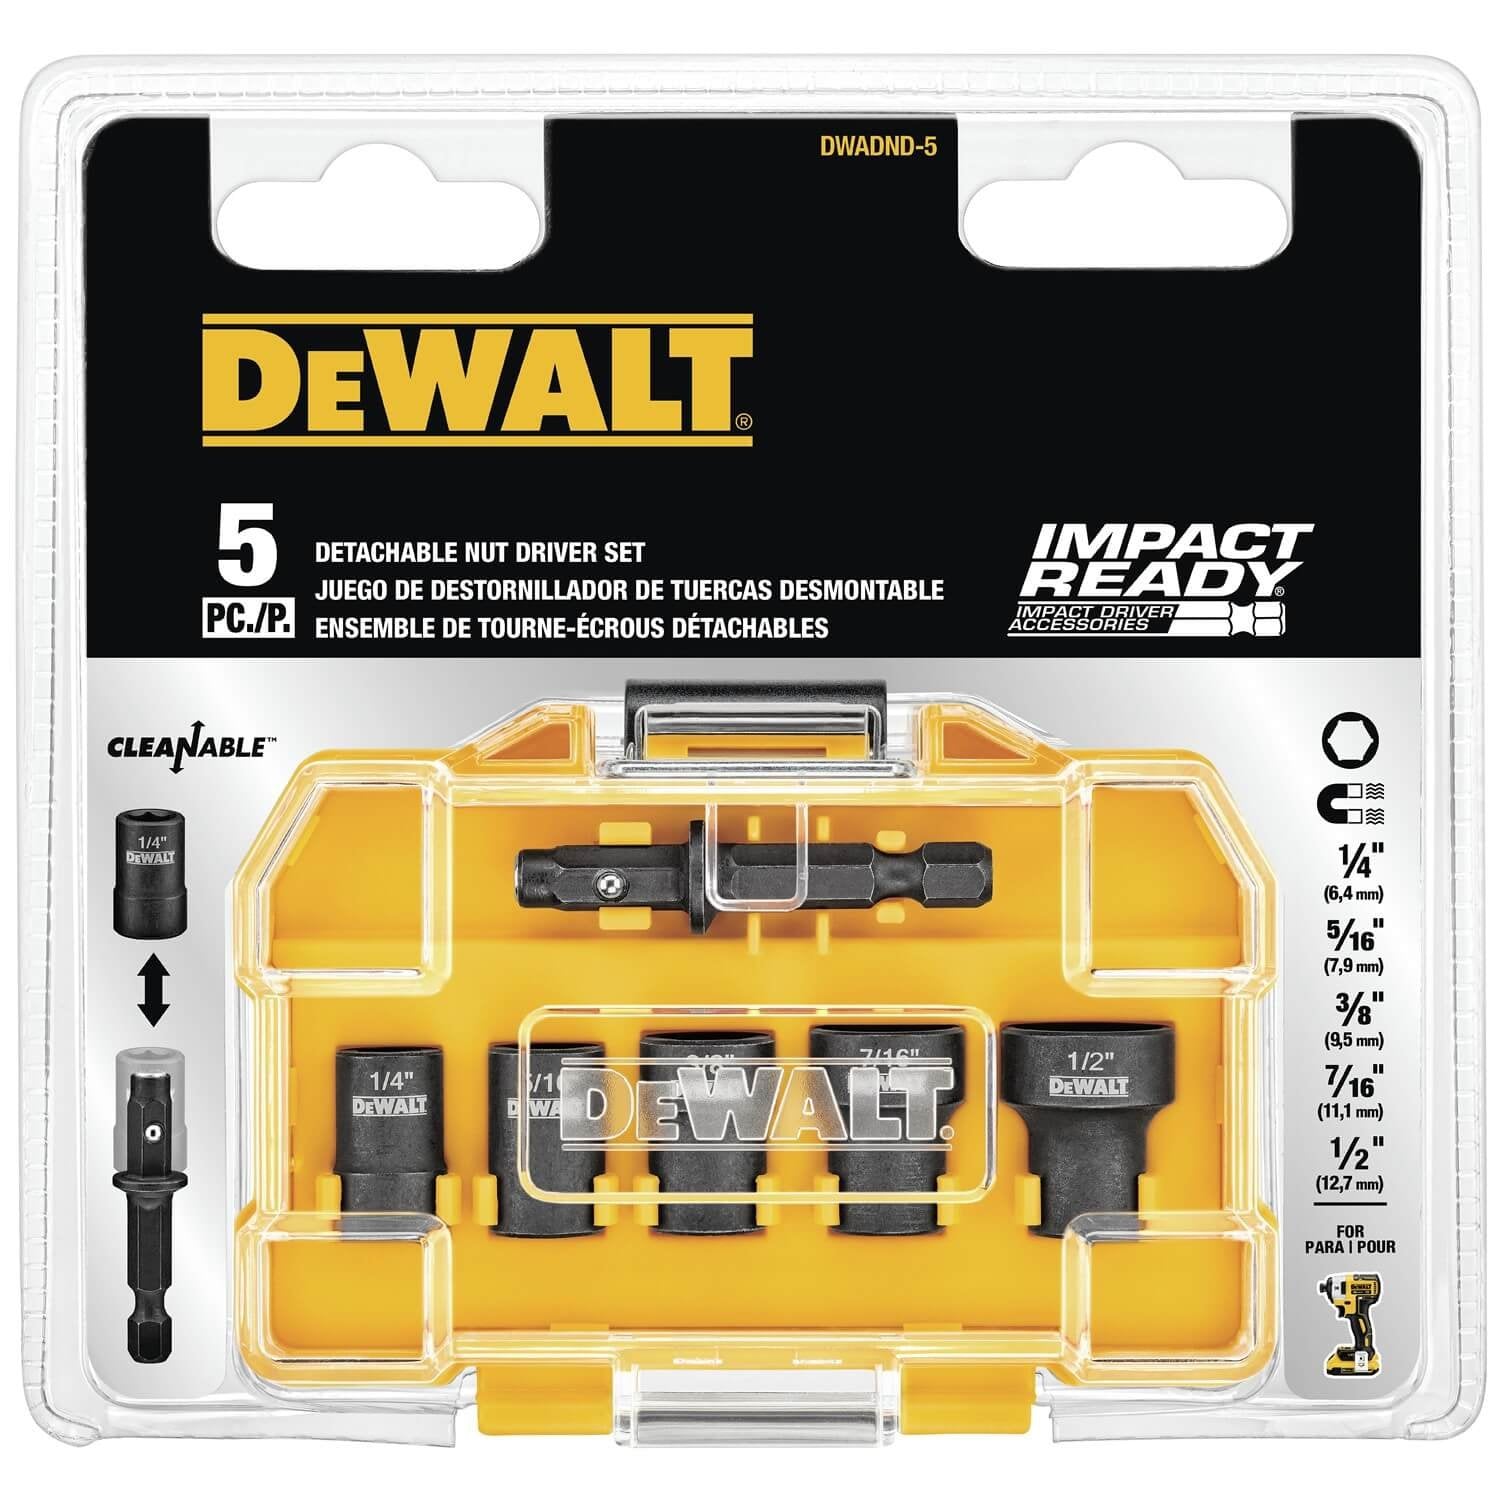 DEWALT DWADND-5 - IMPACT READY 5-Piece Nutsetter Impact Driver Bit Set